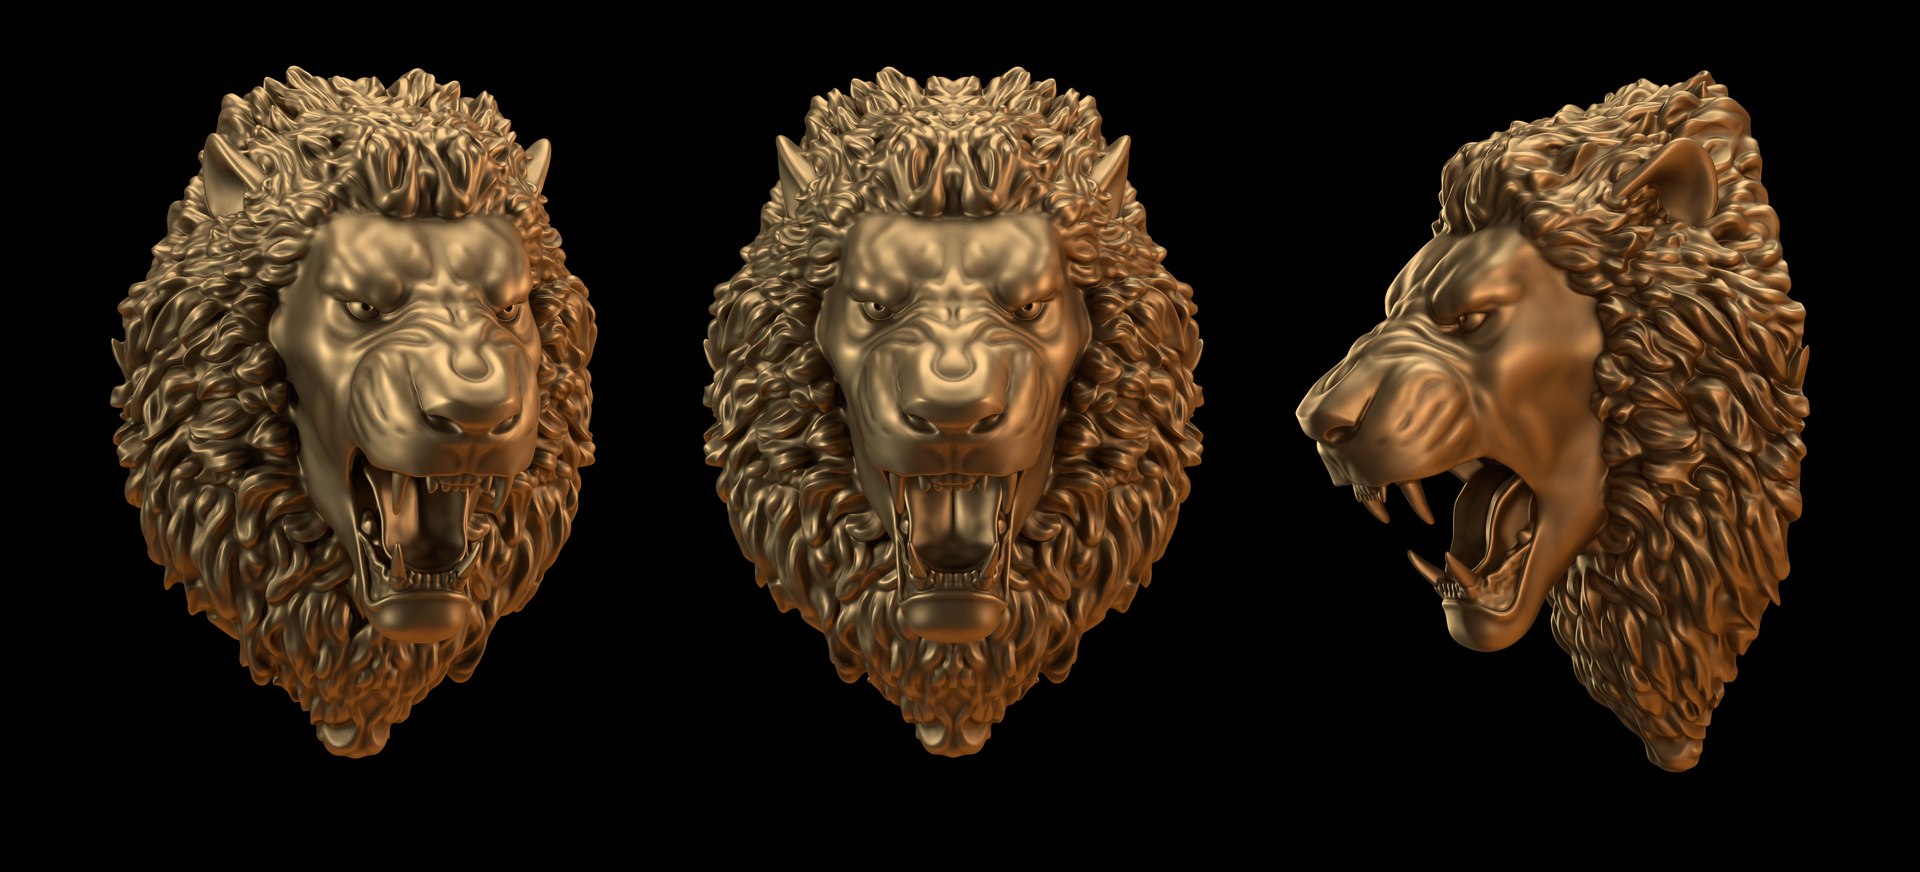 lion head obj https://p.turbosquid.com/ts-thumb/Zd/mENMKb/jR3j7YK7/01/jpg/1478801537/1920x1080/fit_q87/4851236b24ef9e38410a956ed9cb87e4cdd5b903/01.jpg